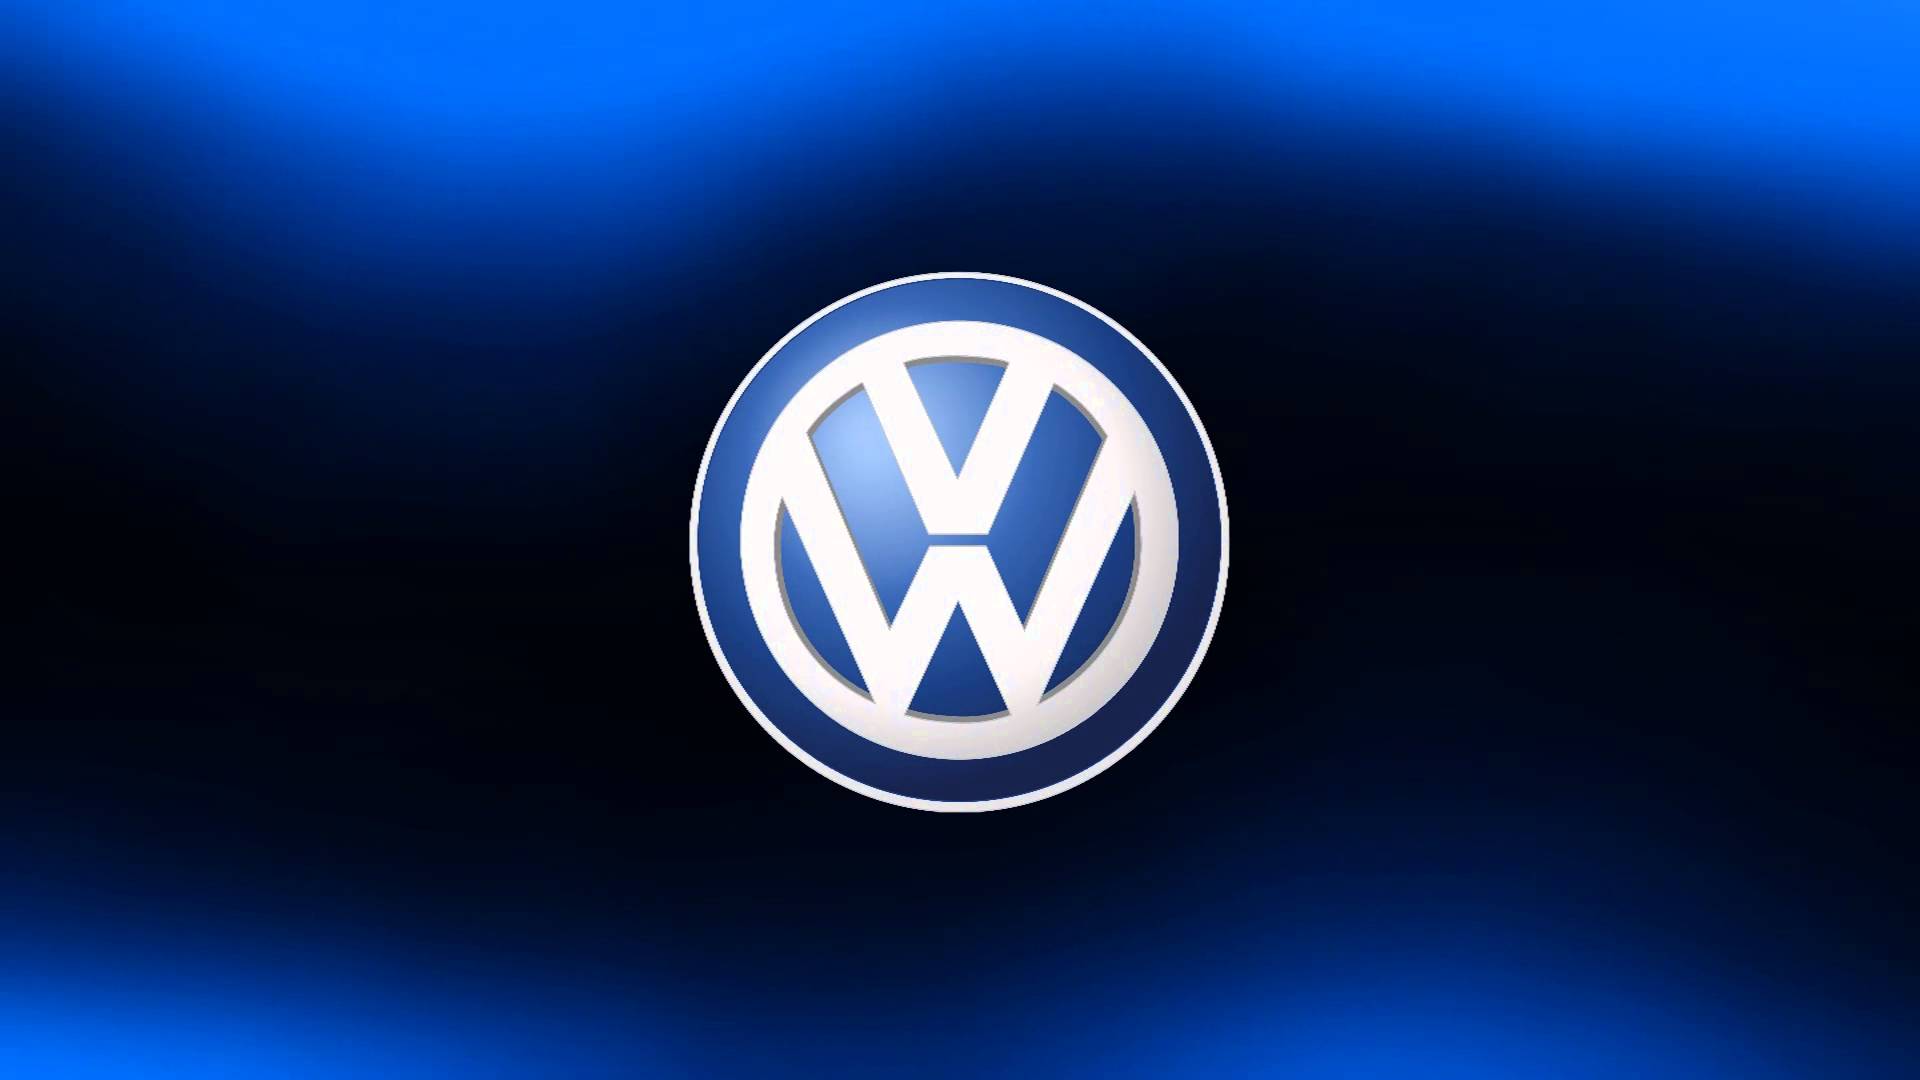 Volkswagen Shares Plunge Worst Ever on Emission Scandal, Germany to Investigate its Europe Emission Data